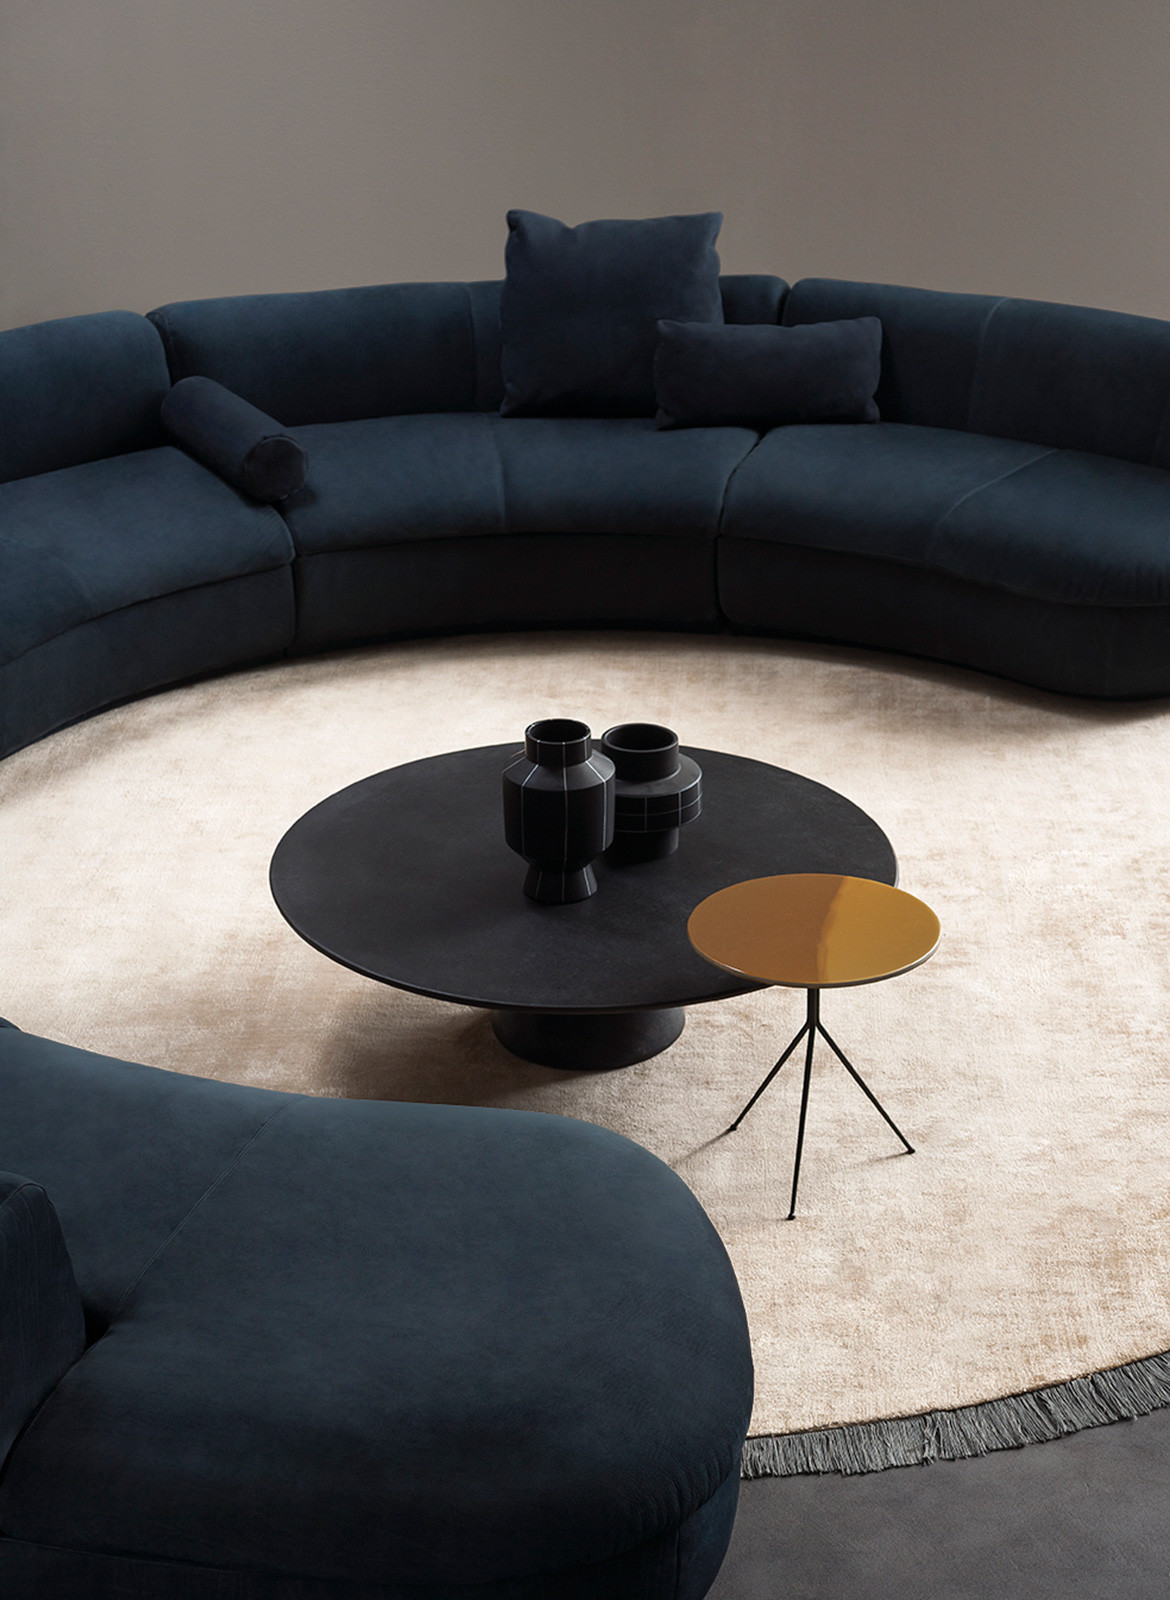 Baxter Furniture Piaf Sofa